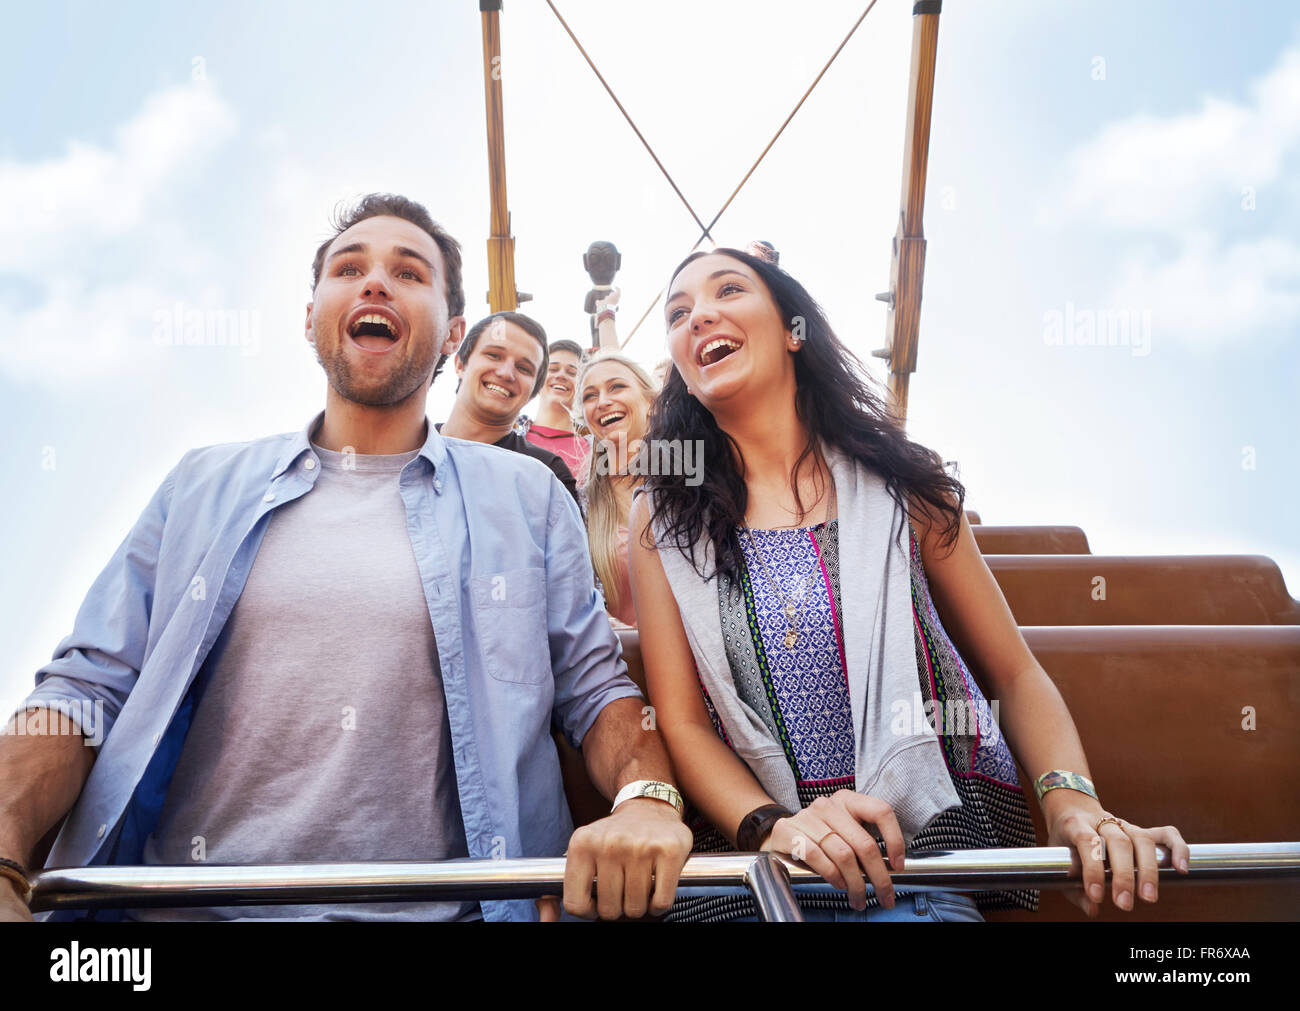 Enthusiastic couple riding amusement park ride Stock Photo